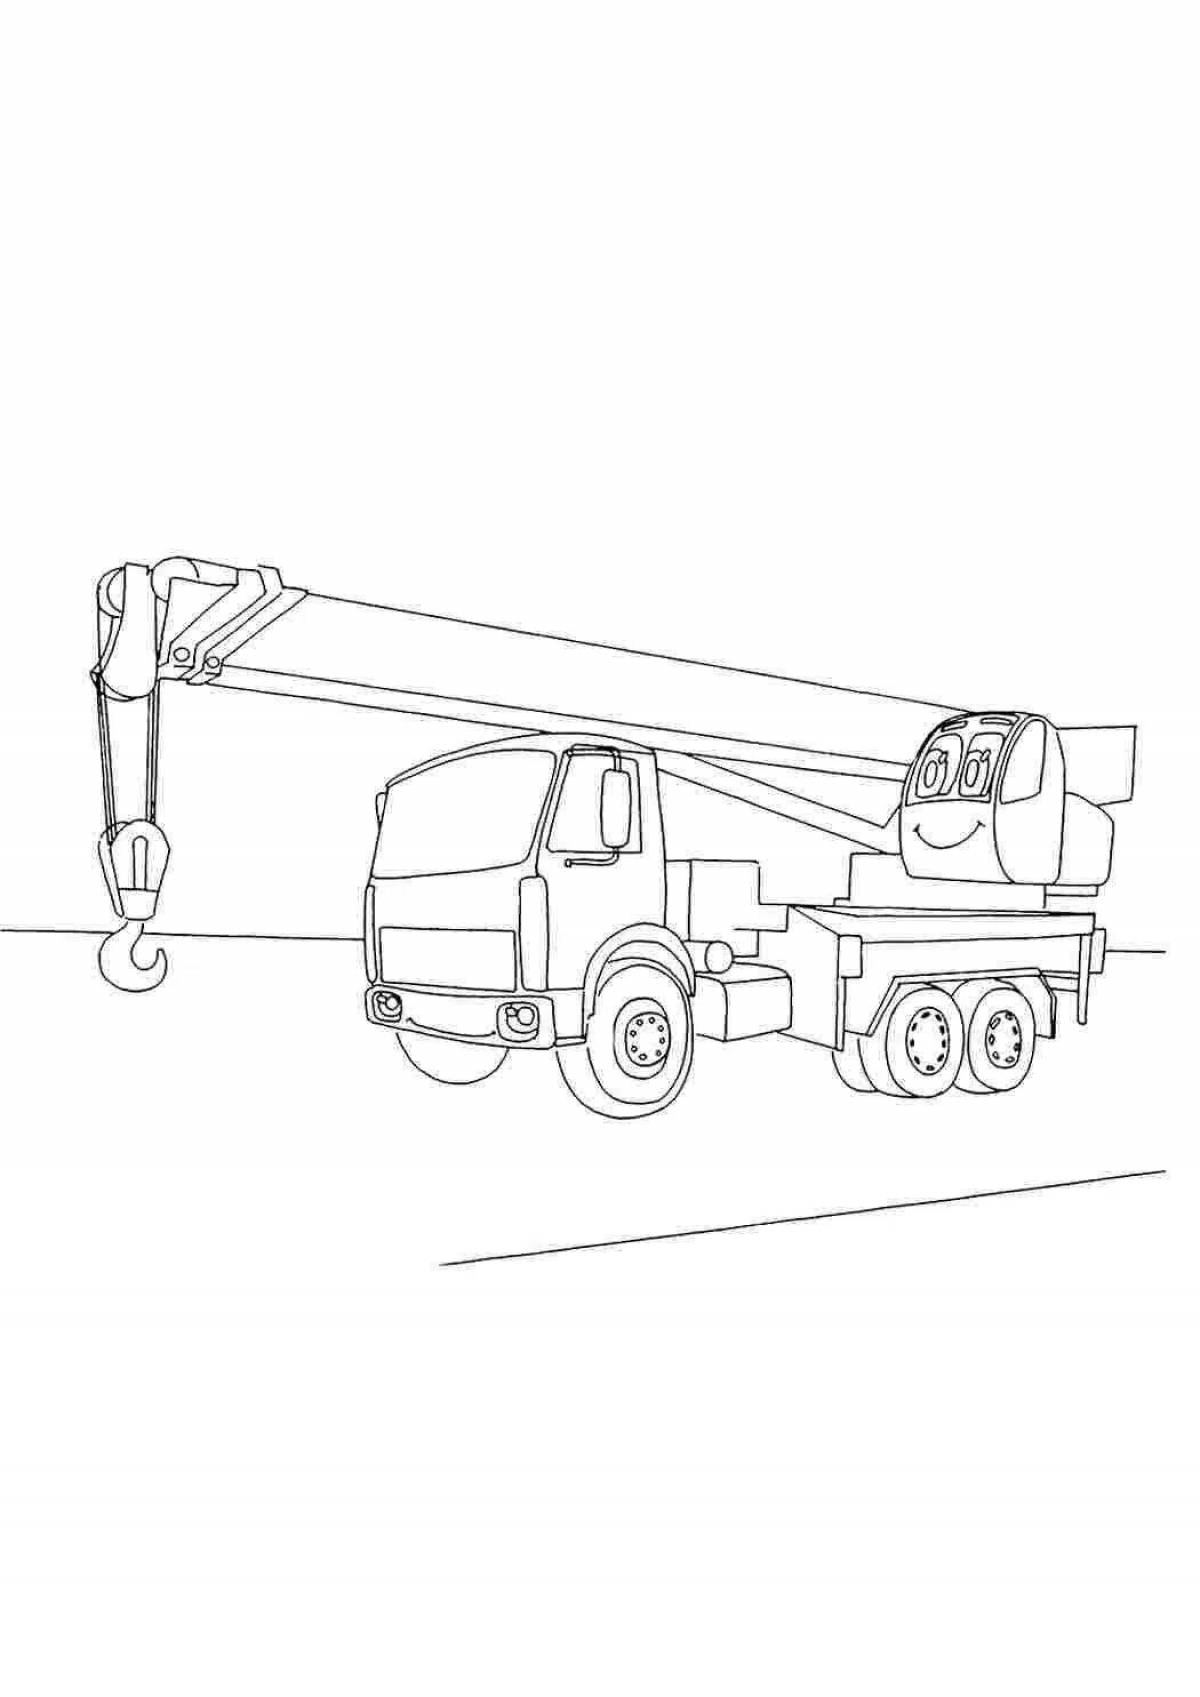 Shining truck crane coloring page for schoolchildren